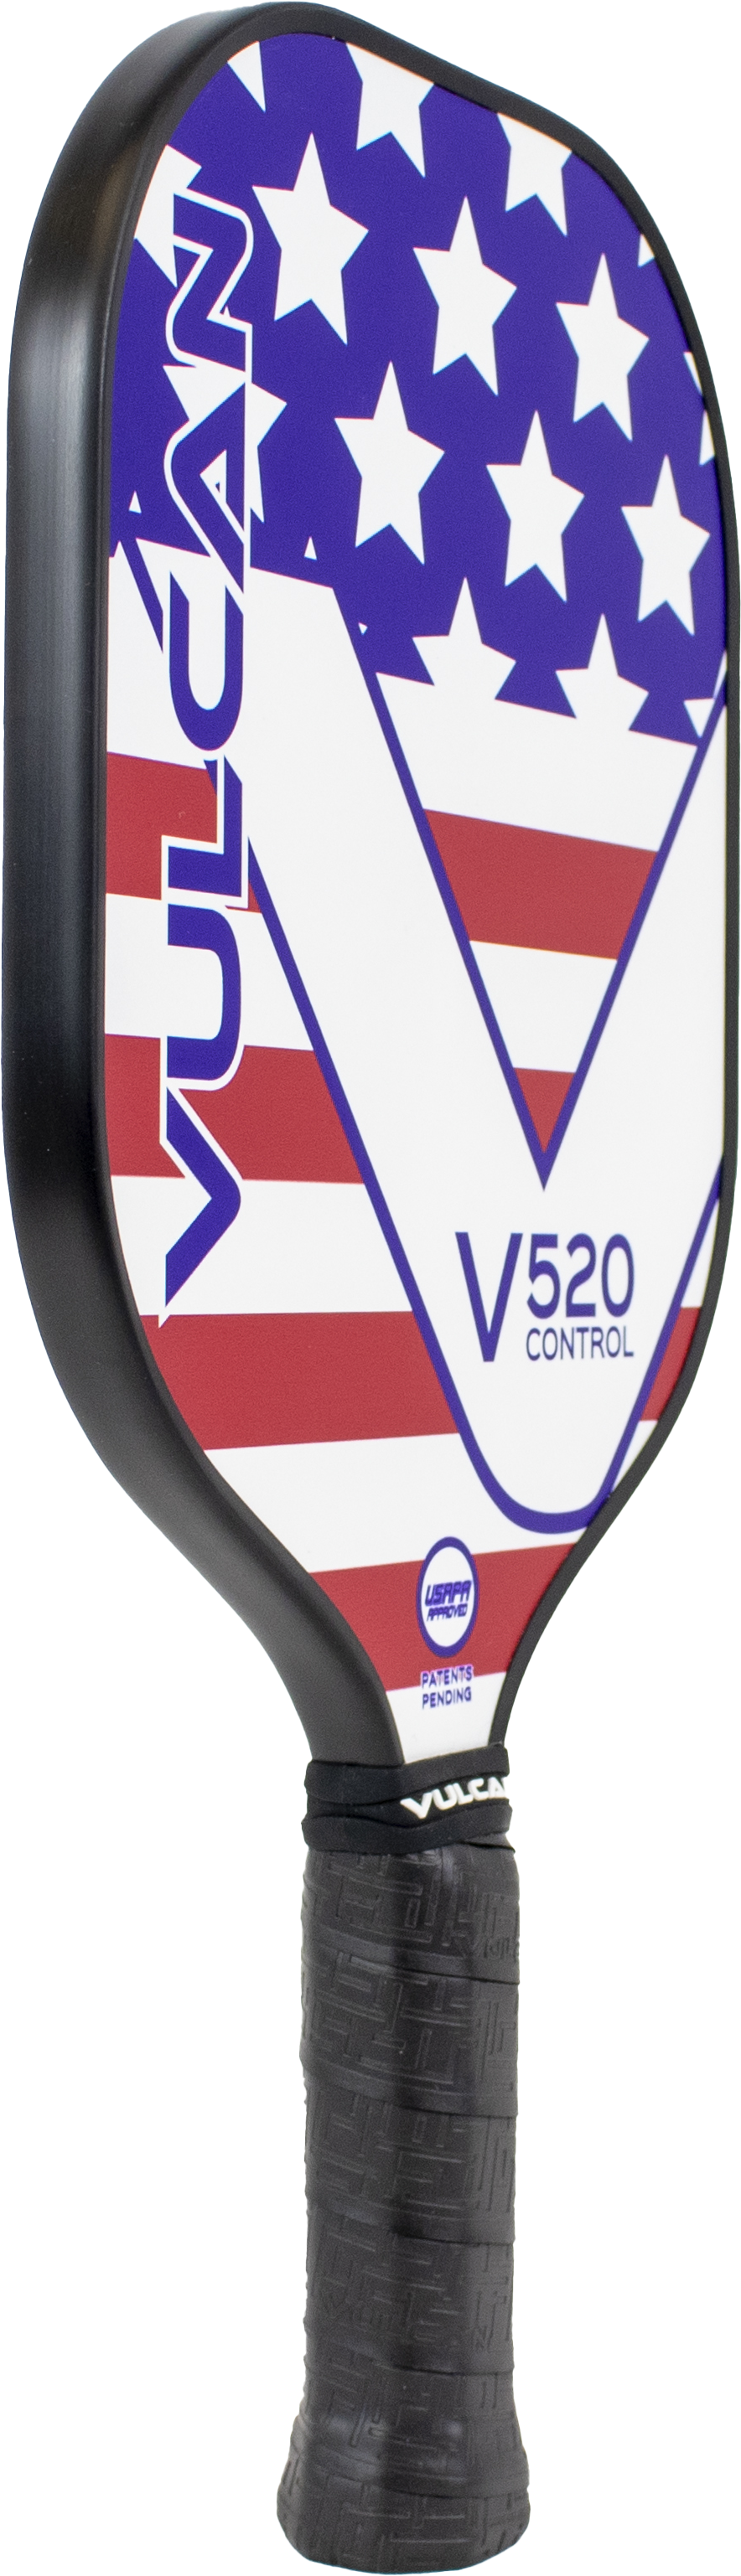 A Vulcan V520 Control pickleball paddle featuring an American flag design.